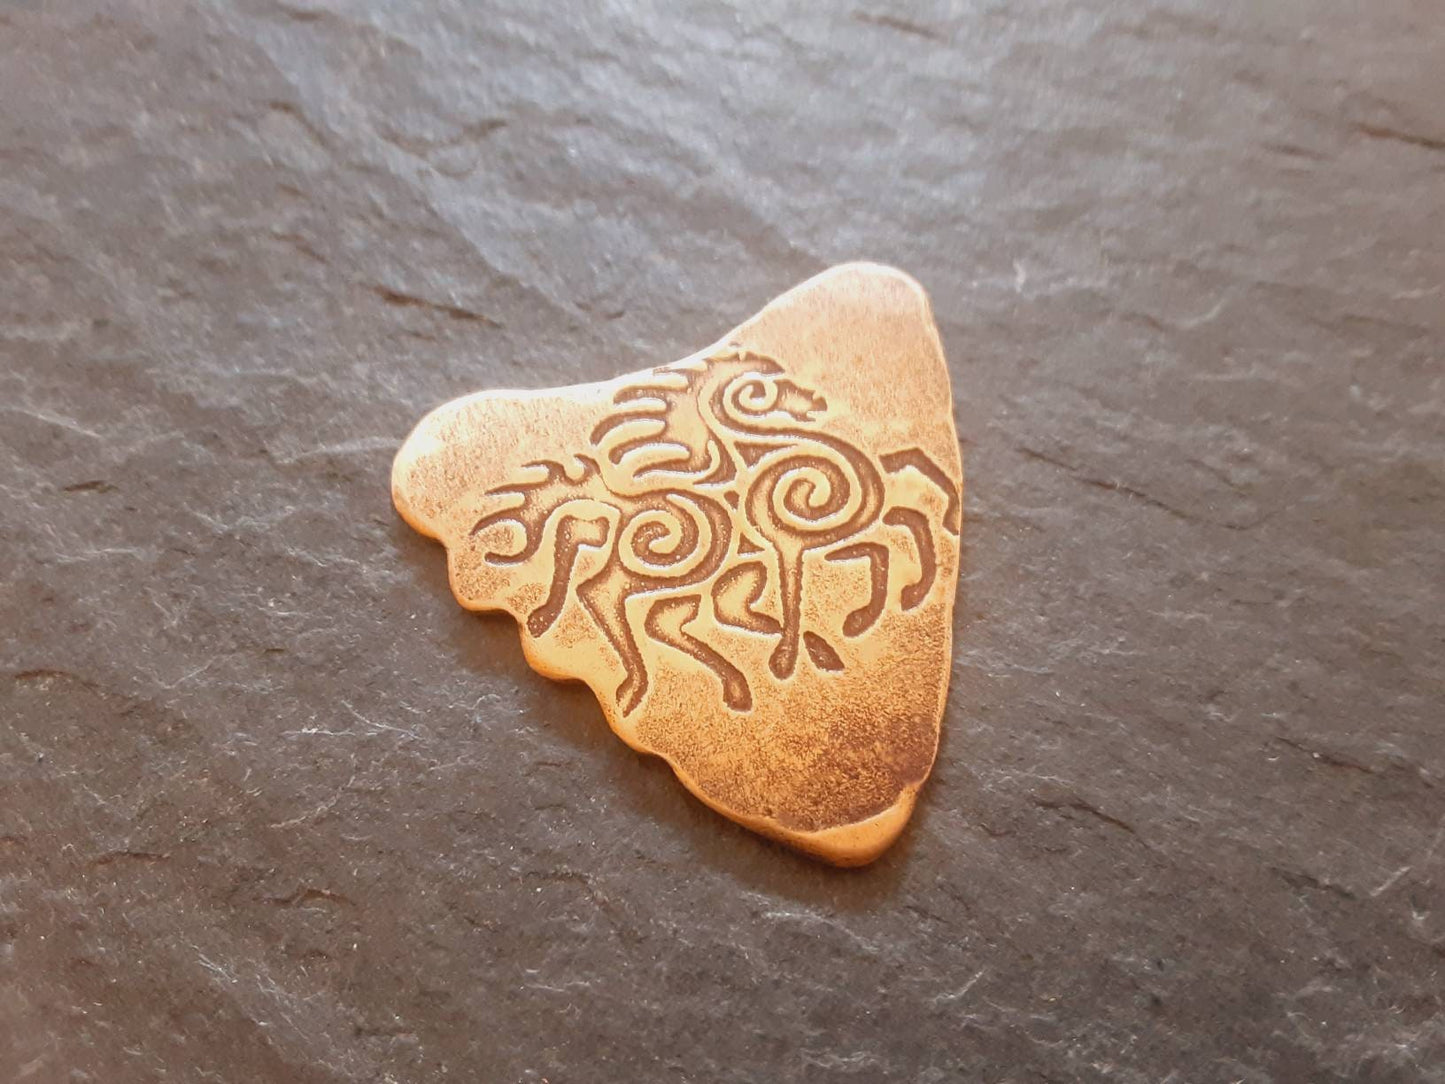 Shark tooth bronze guitar pick with Sleipnir Design from Norse Mythology